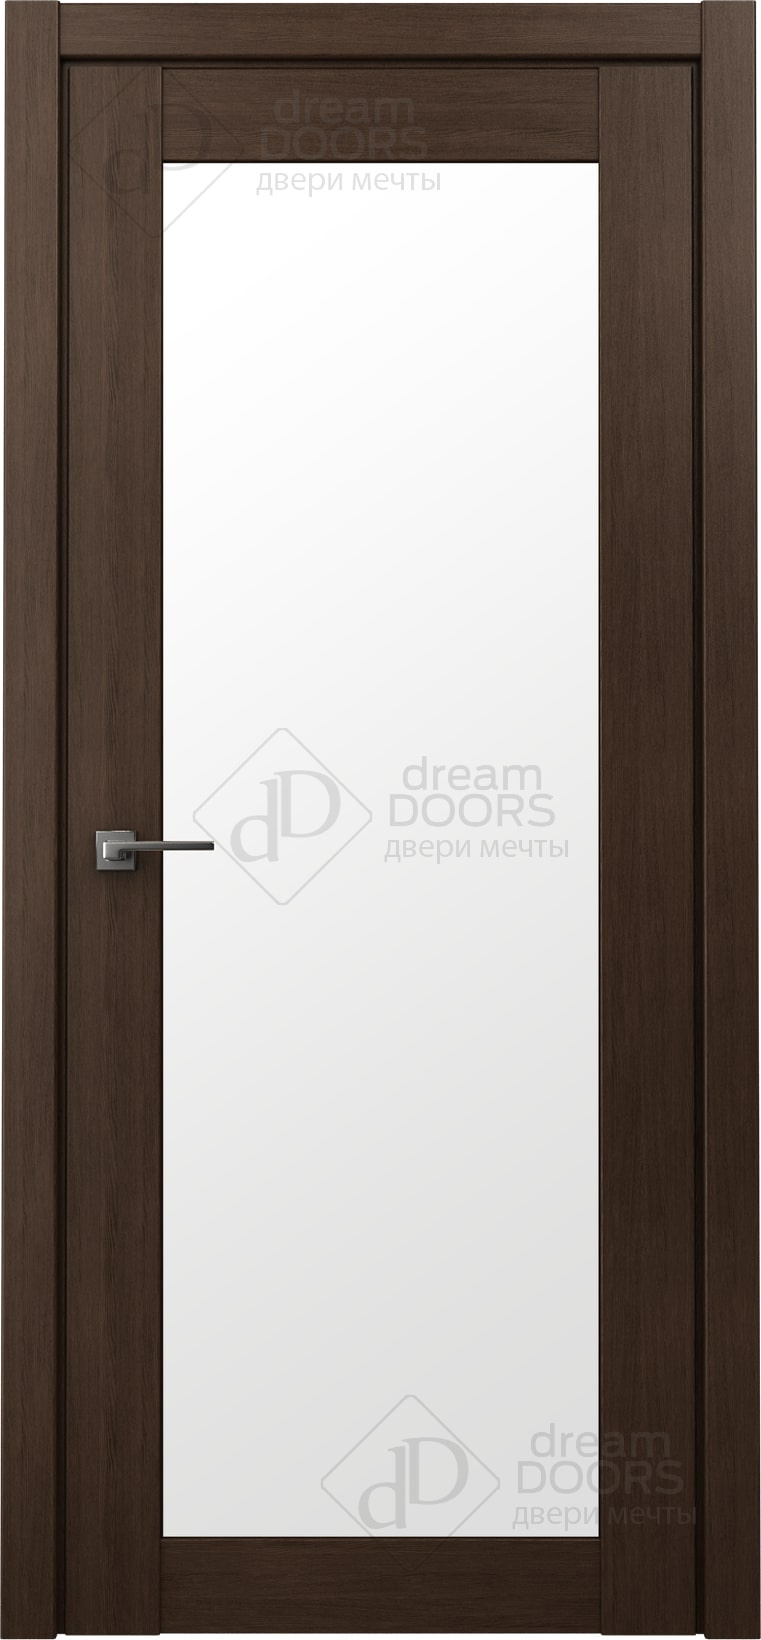 Dream Doors Межкомнатная дверь Престиж 1, арт. 16430 - фото №4